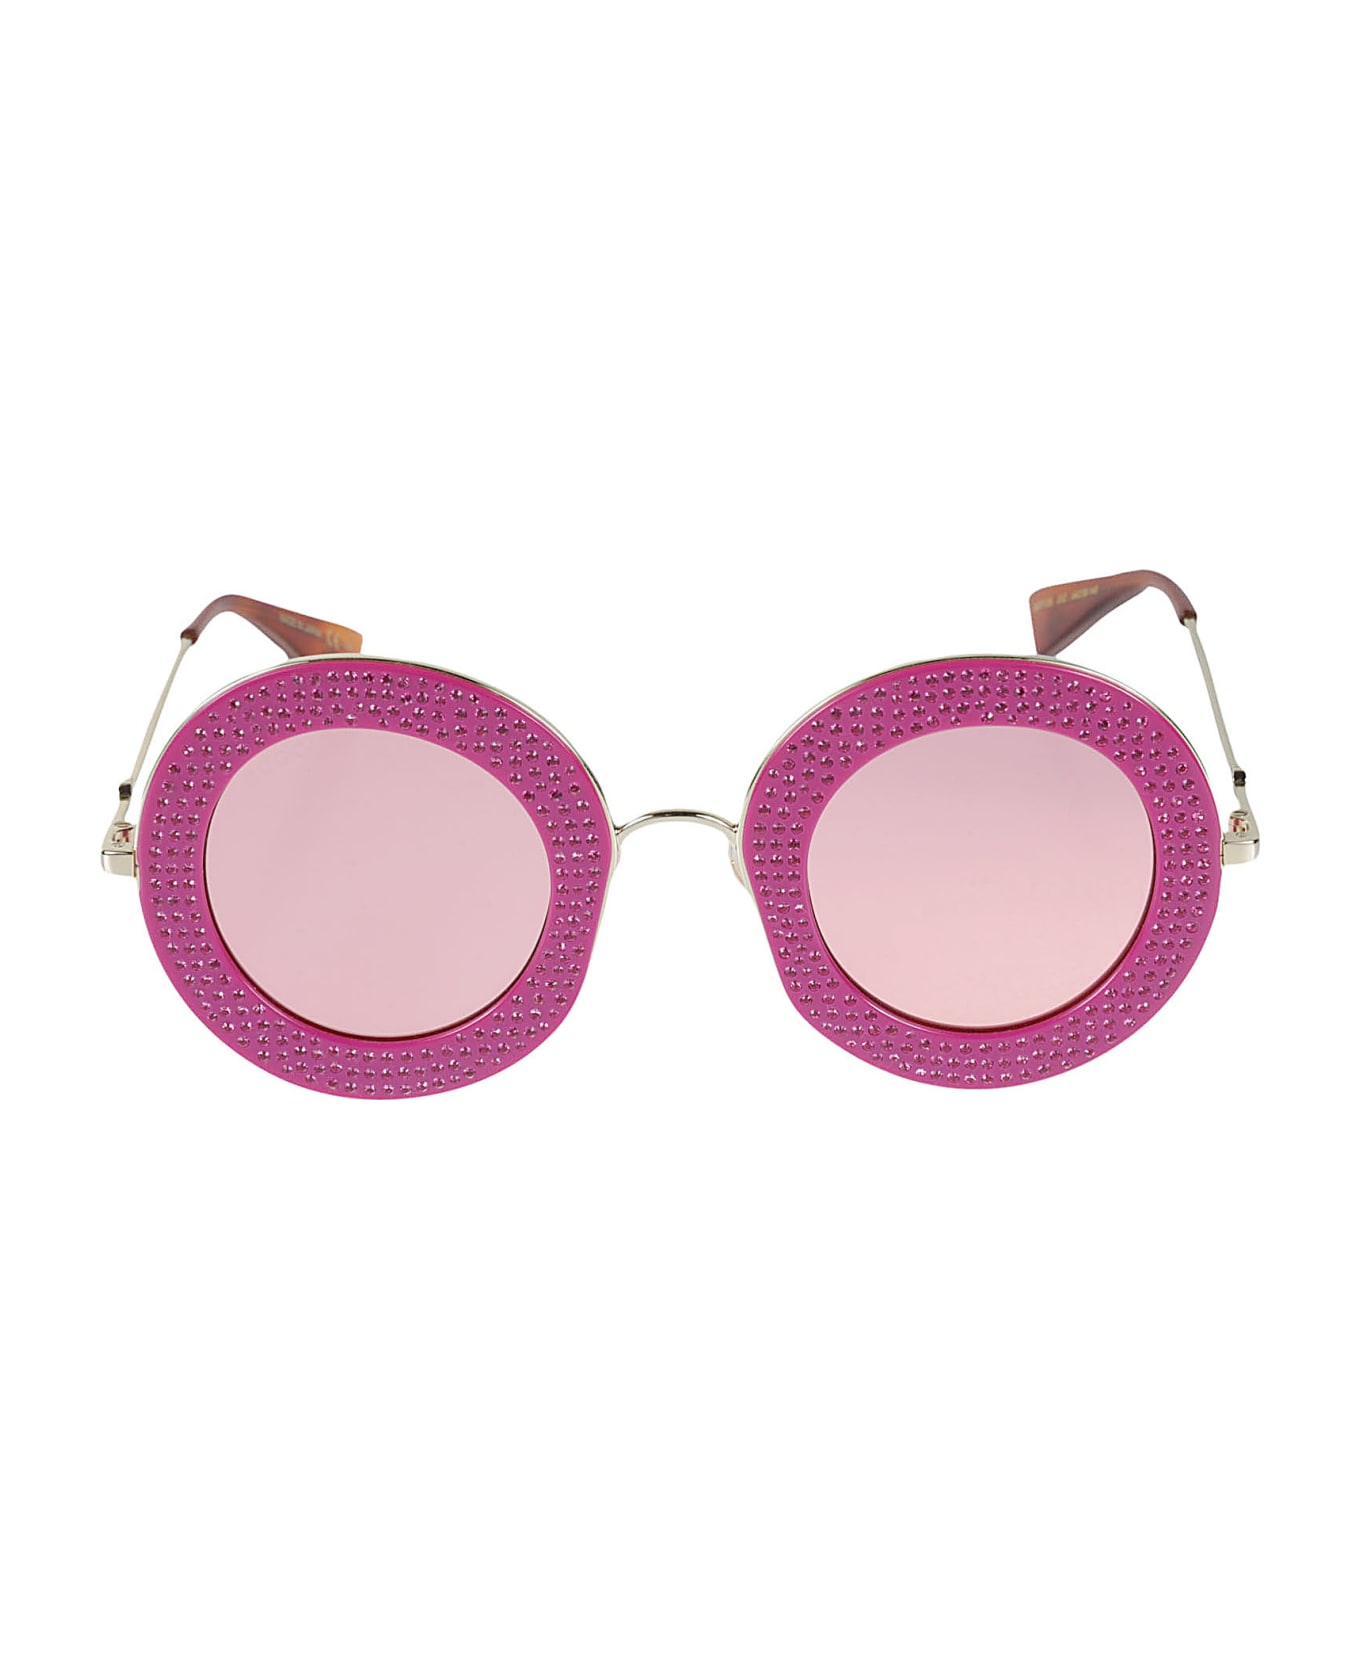 Gucci Eyewear Embellished Round Sunglasses - 012 fuchsia gold pink サングラス